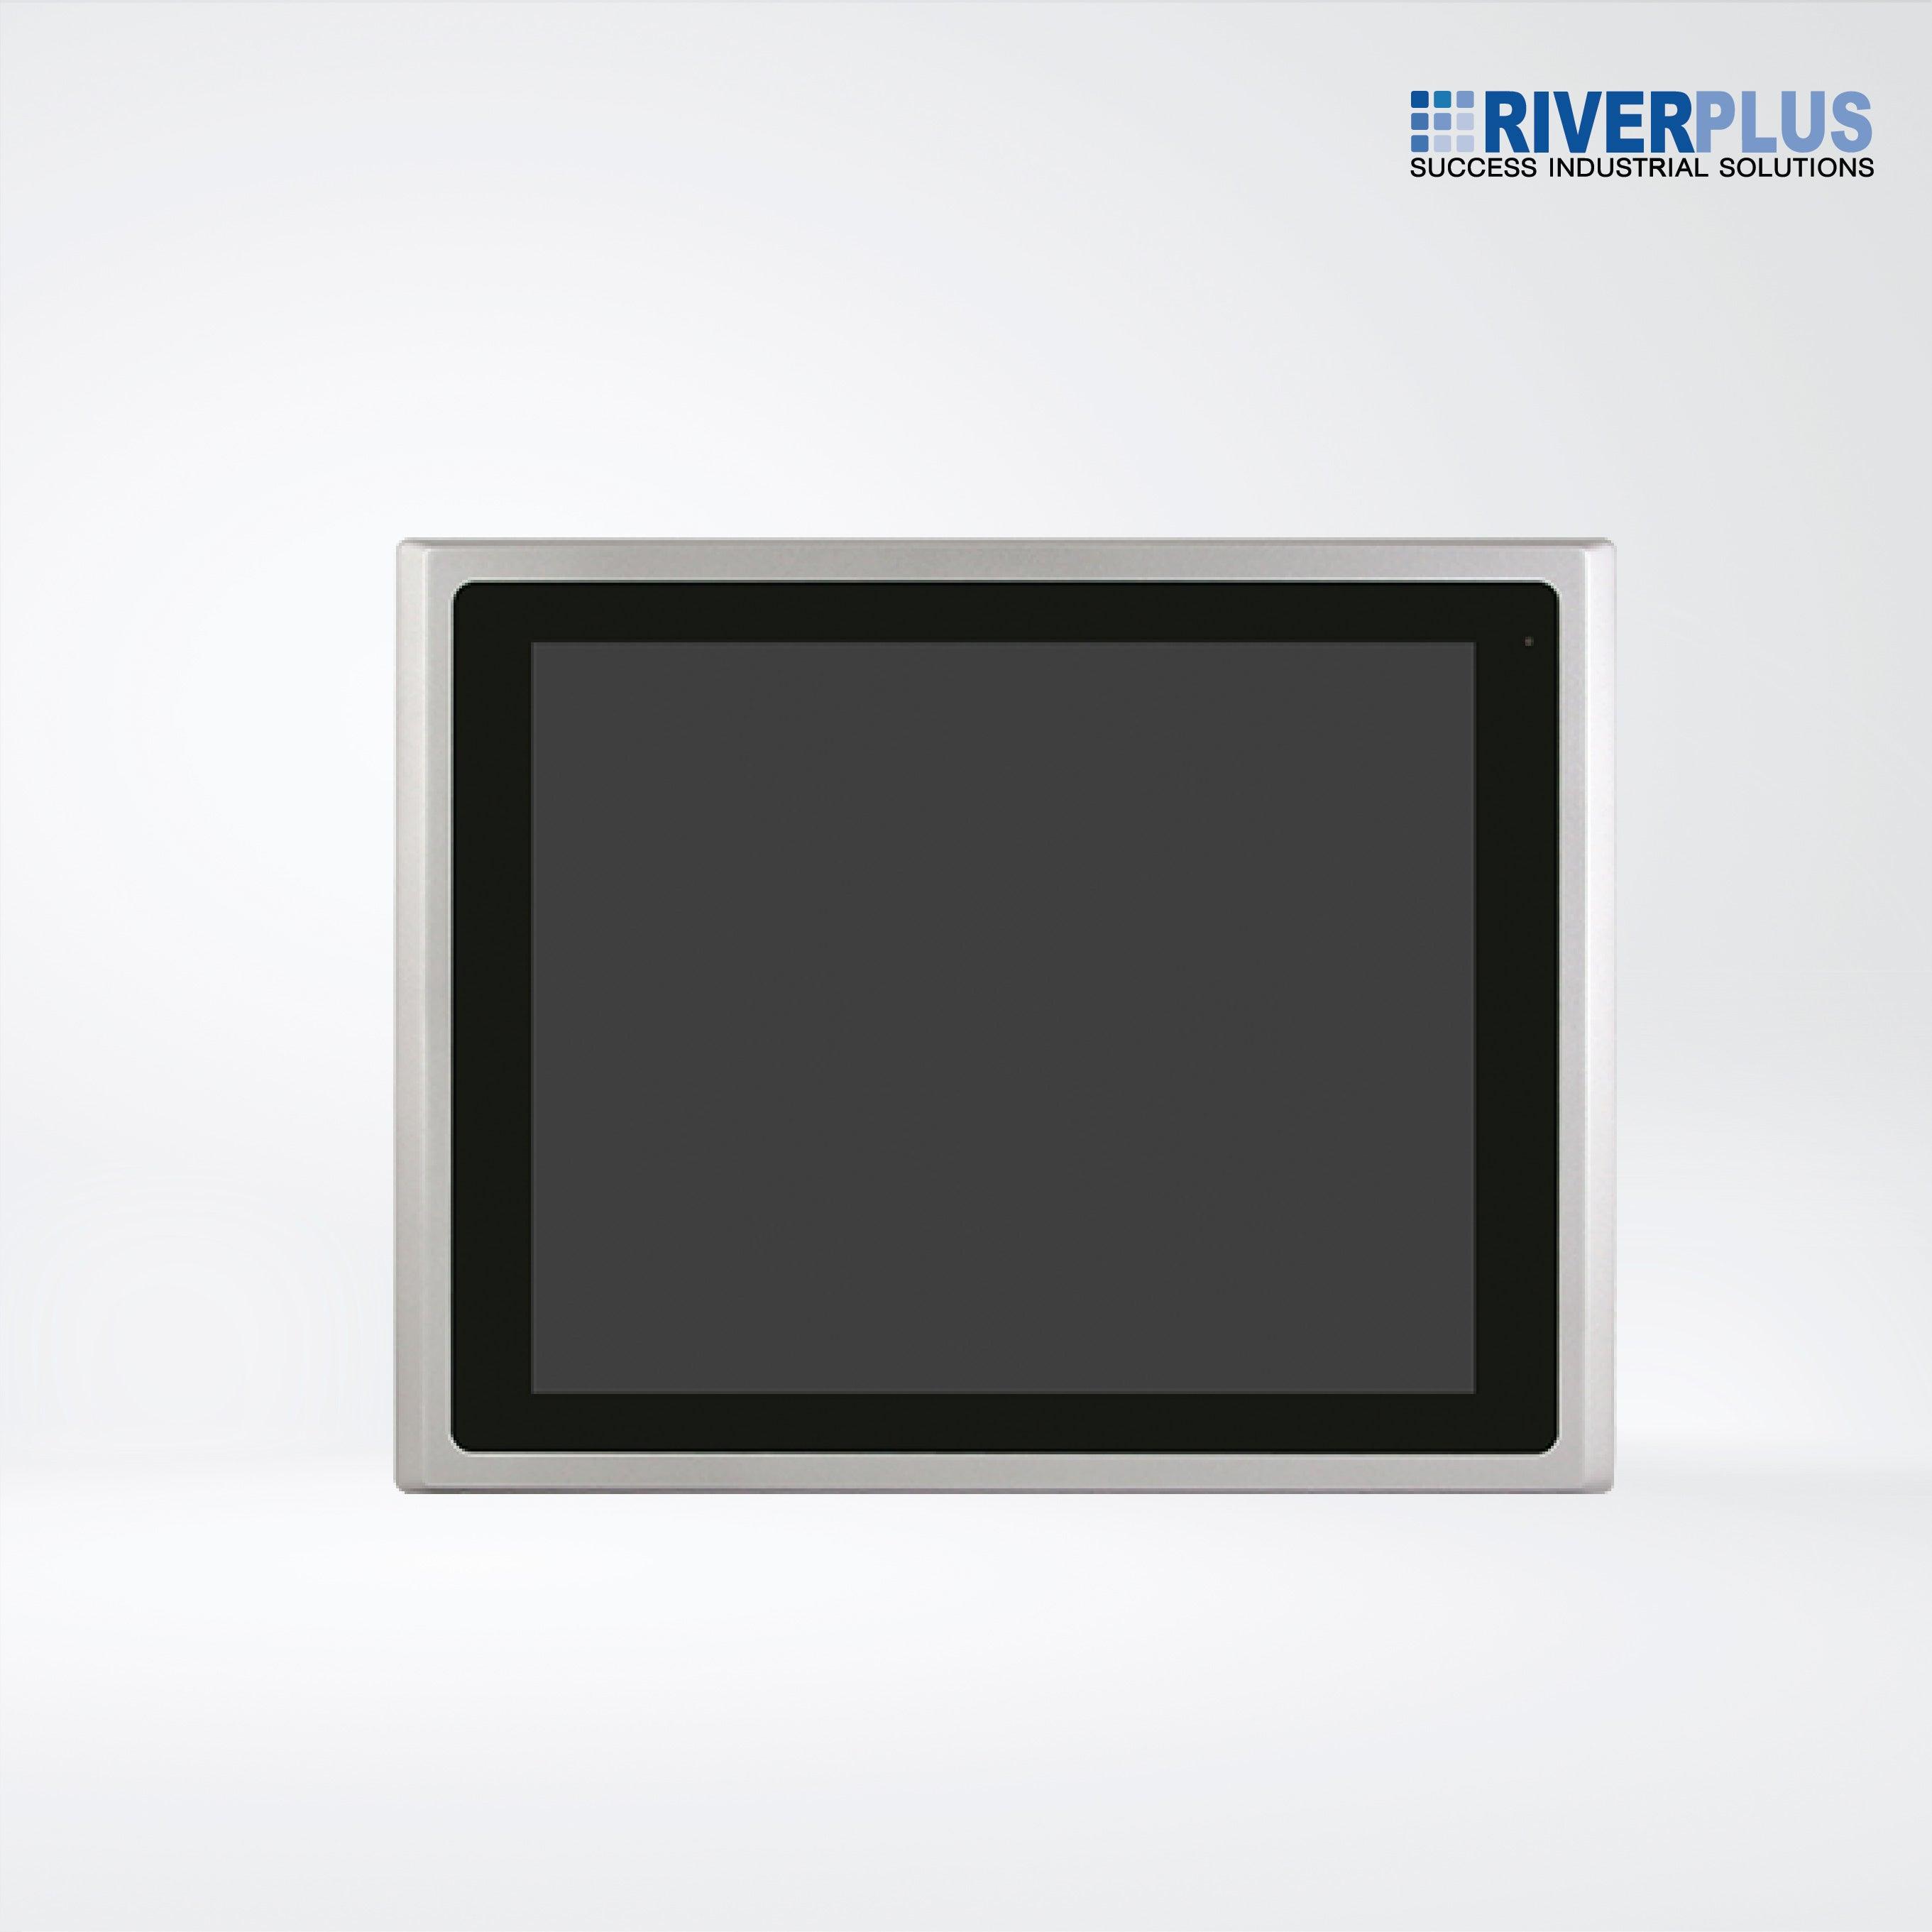 ViPAC-917RH 17” Intel 6th/7th Core i3/i5/i7 Panel PC - Riverplus